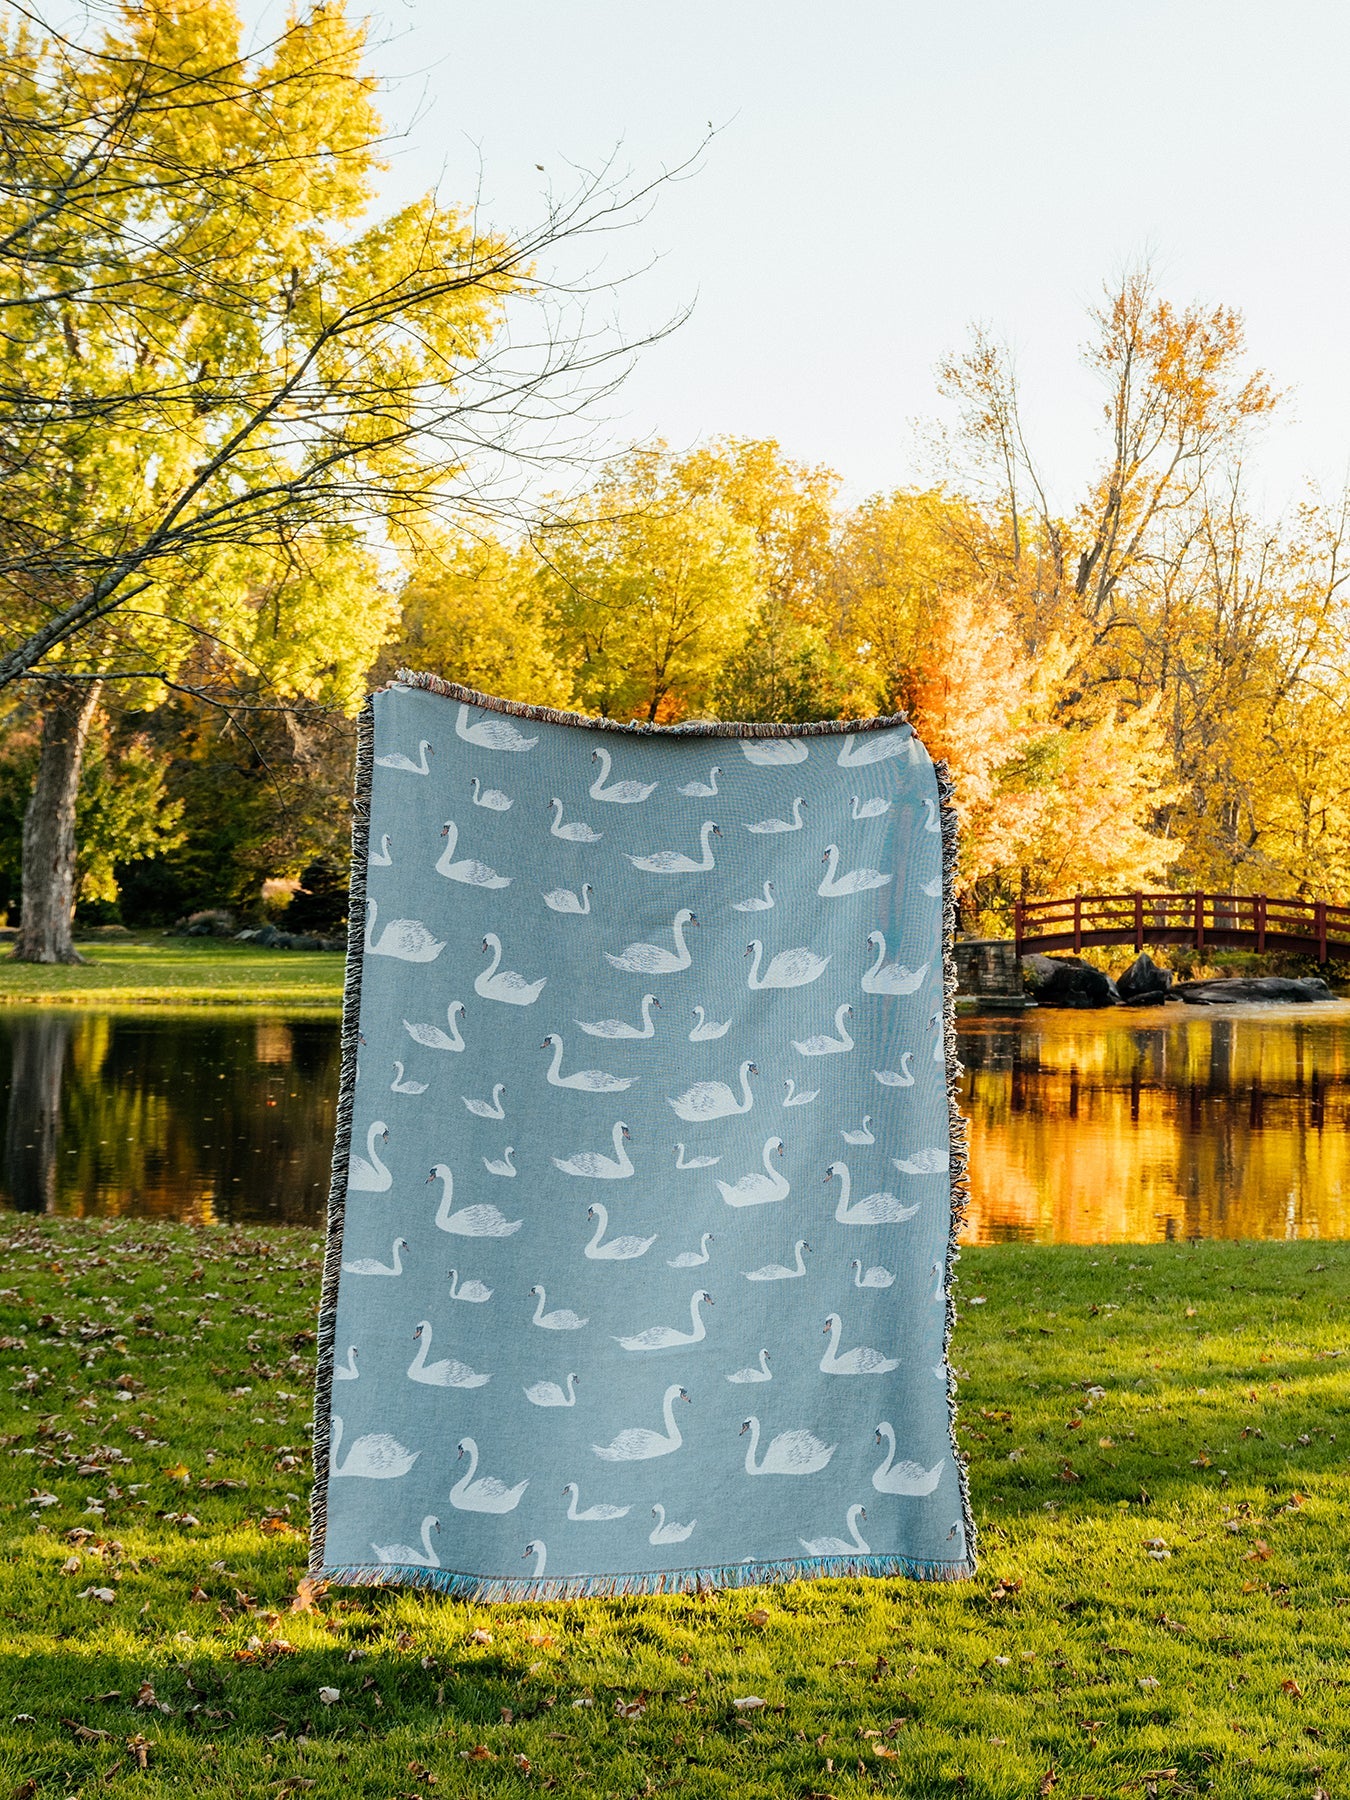 Swans Woven Throw Blanket